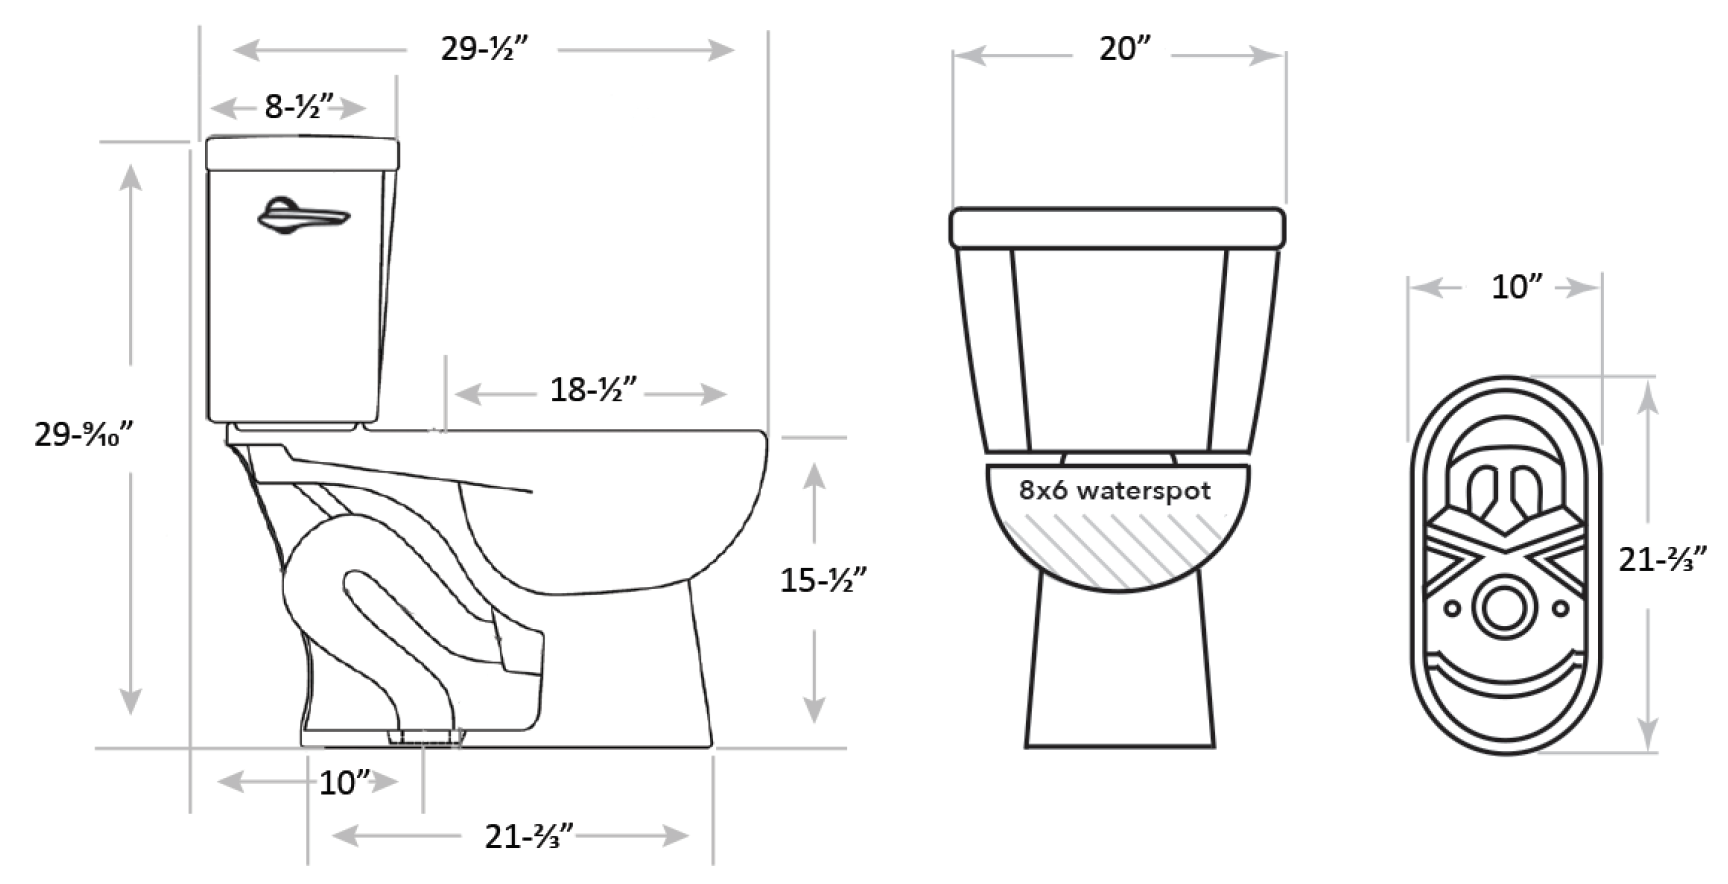 BARRON Elongated Bowl Toilet technical information